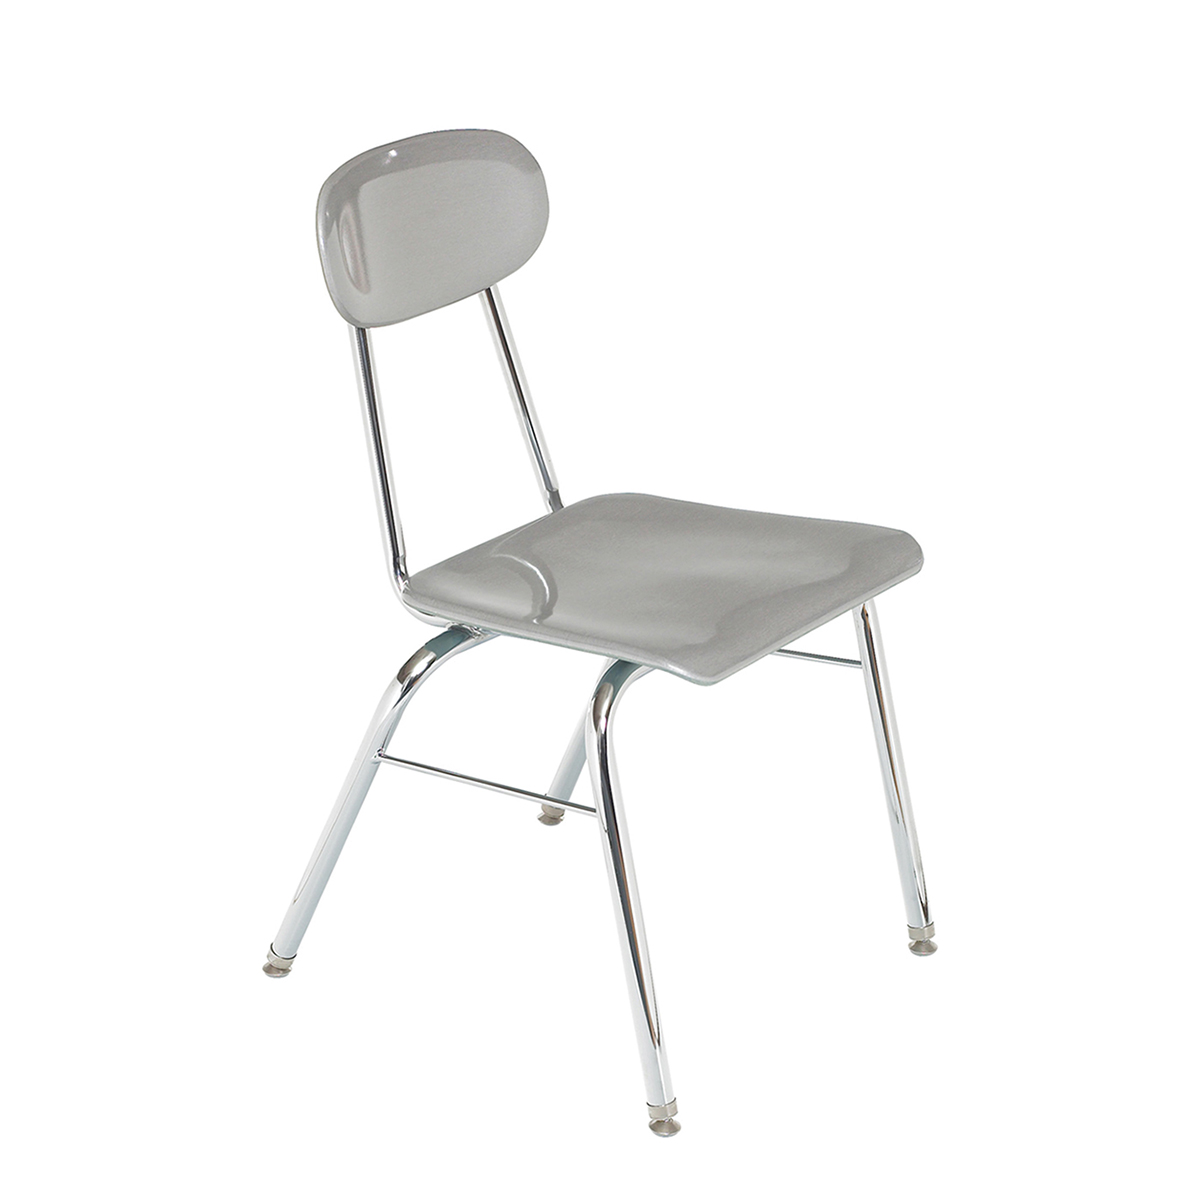 Columbia Hard Plastic Super Stacker Chair 13.5″ w Chrome Frame